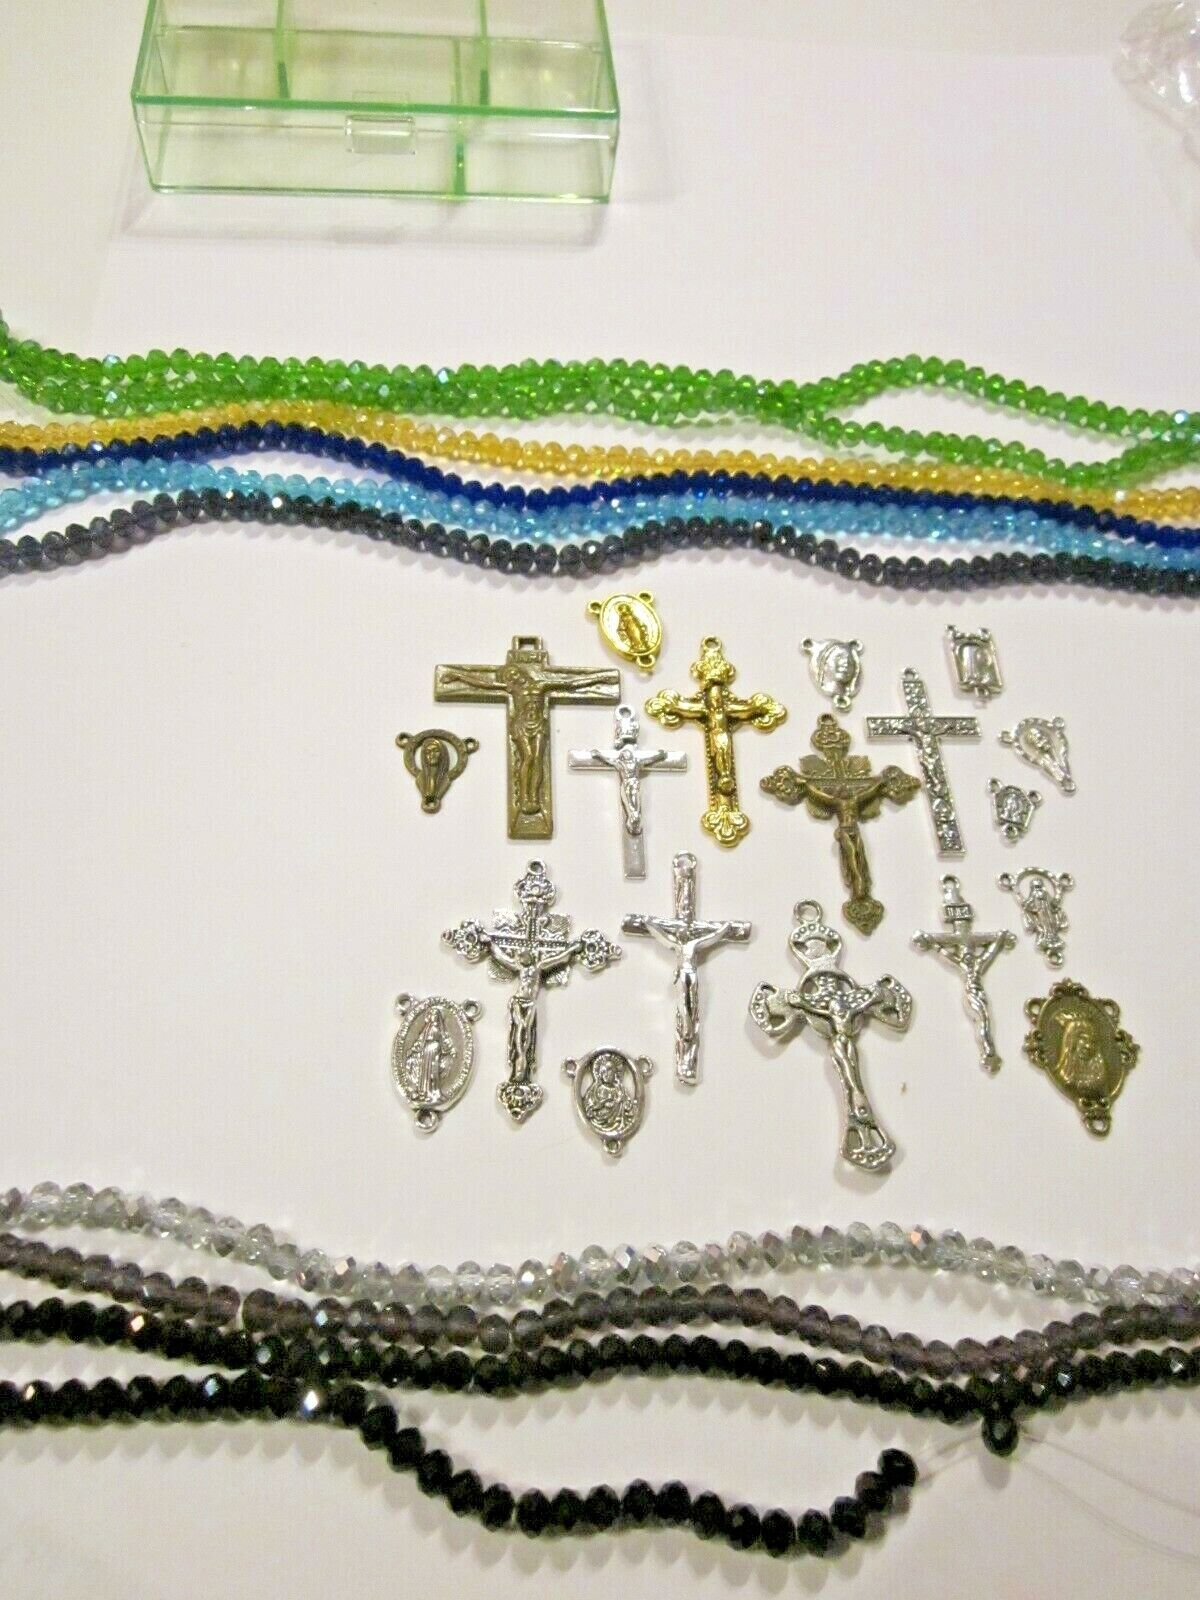  Wonderful  Rosary making kit.  Enough for 8 rosaries  #11-11-7g